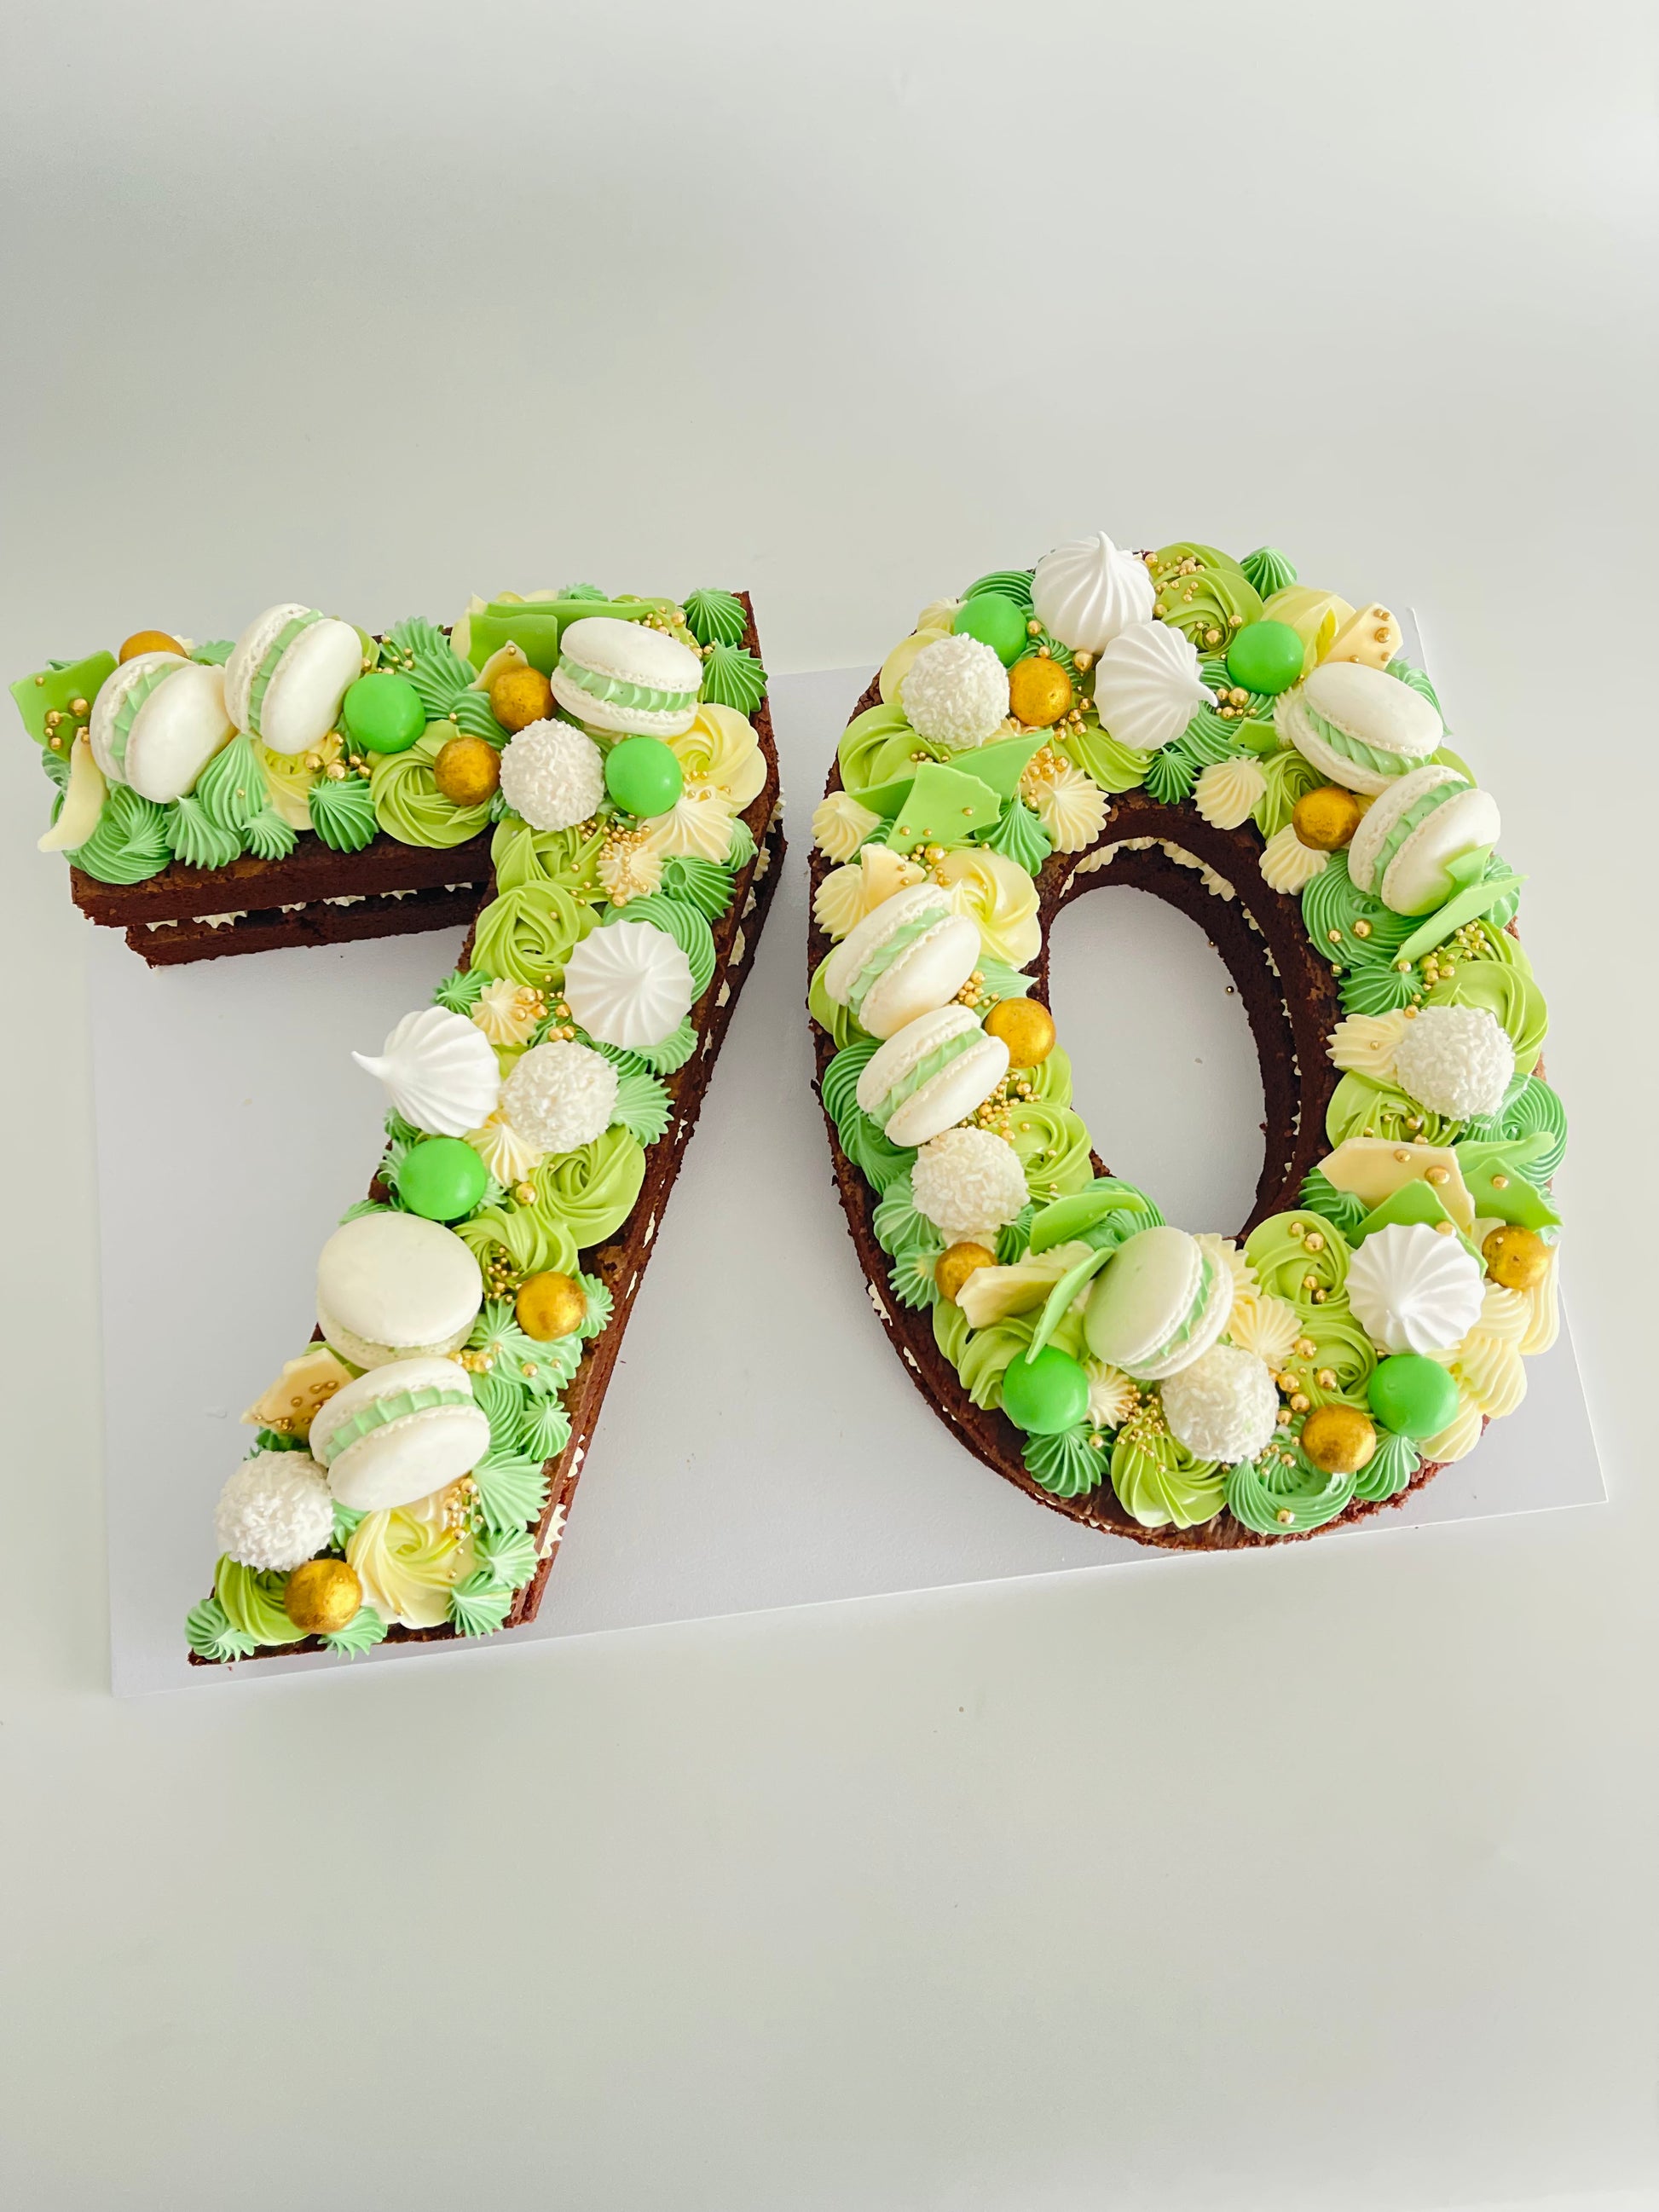 70th birthday cake in green colour scheme